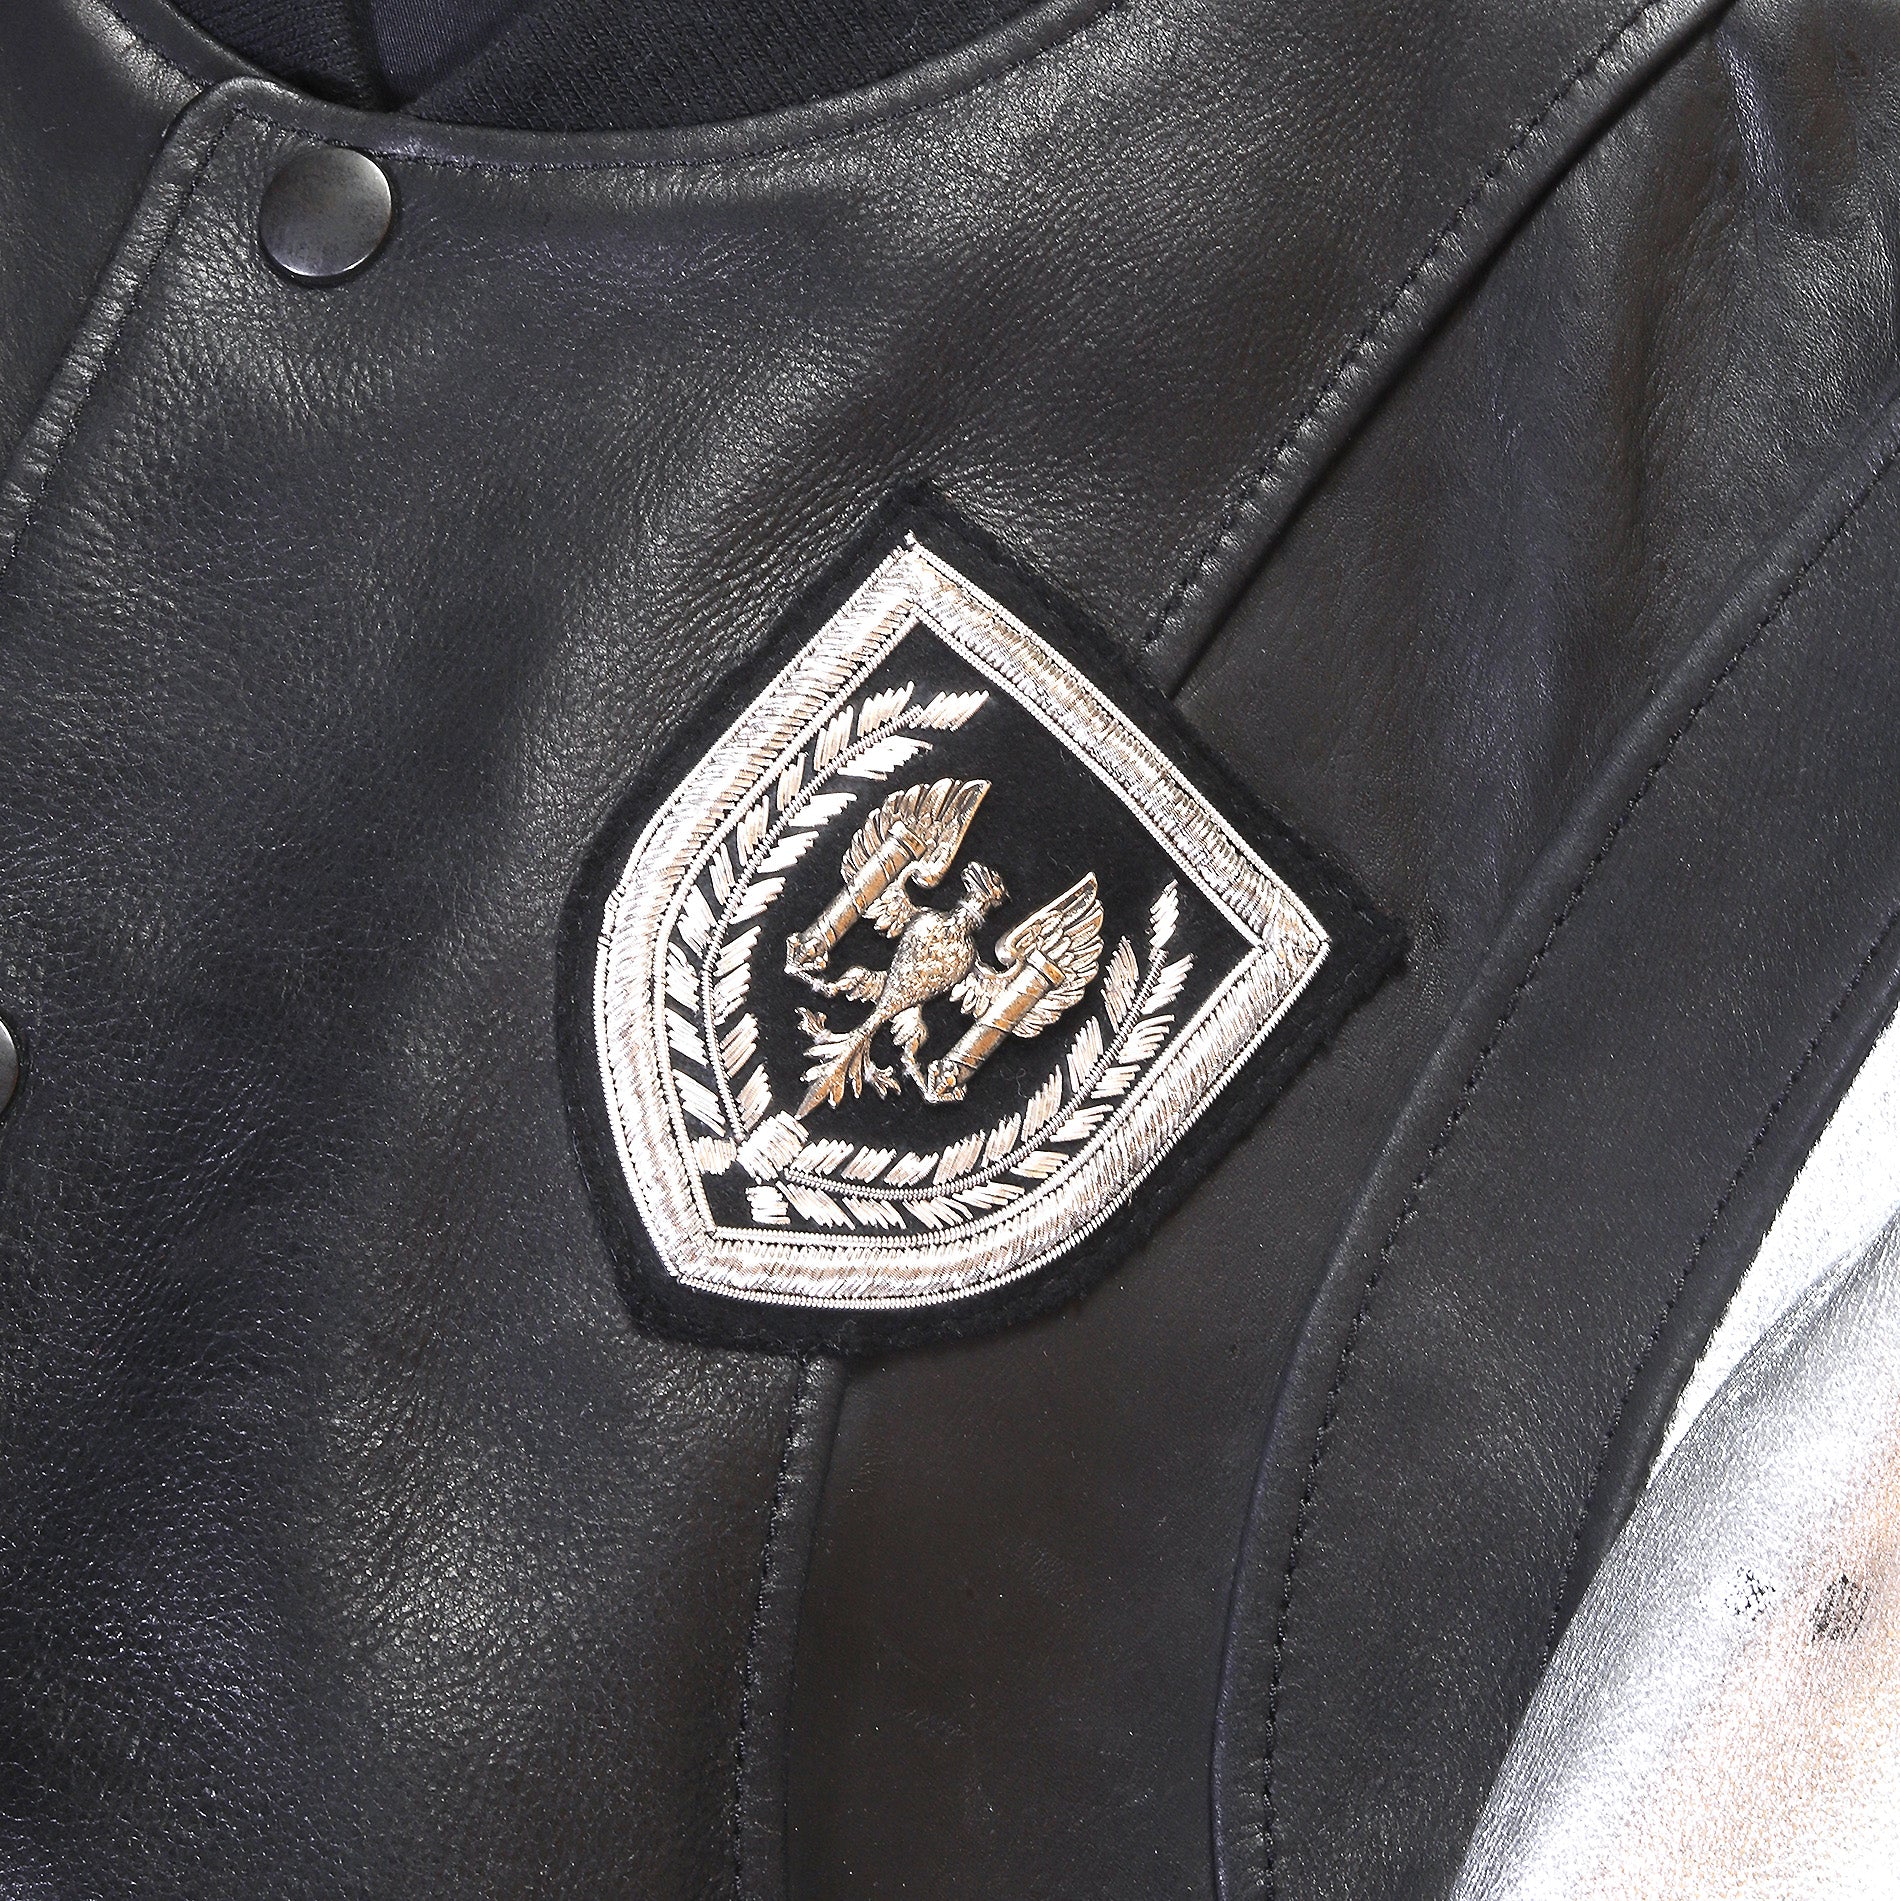 Balmain SS11 Silver Teddy Leather Jacket - Ākaibu Store